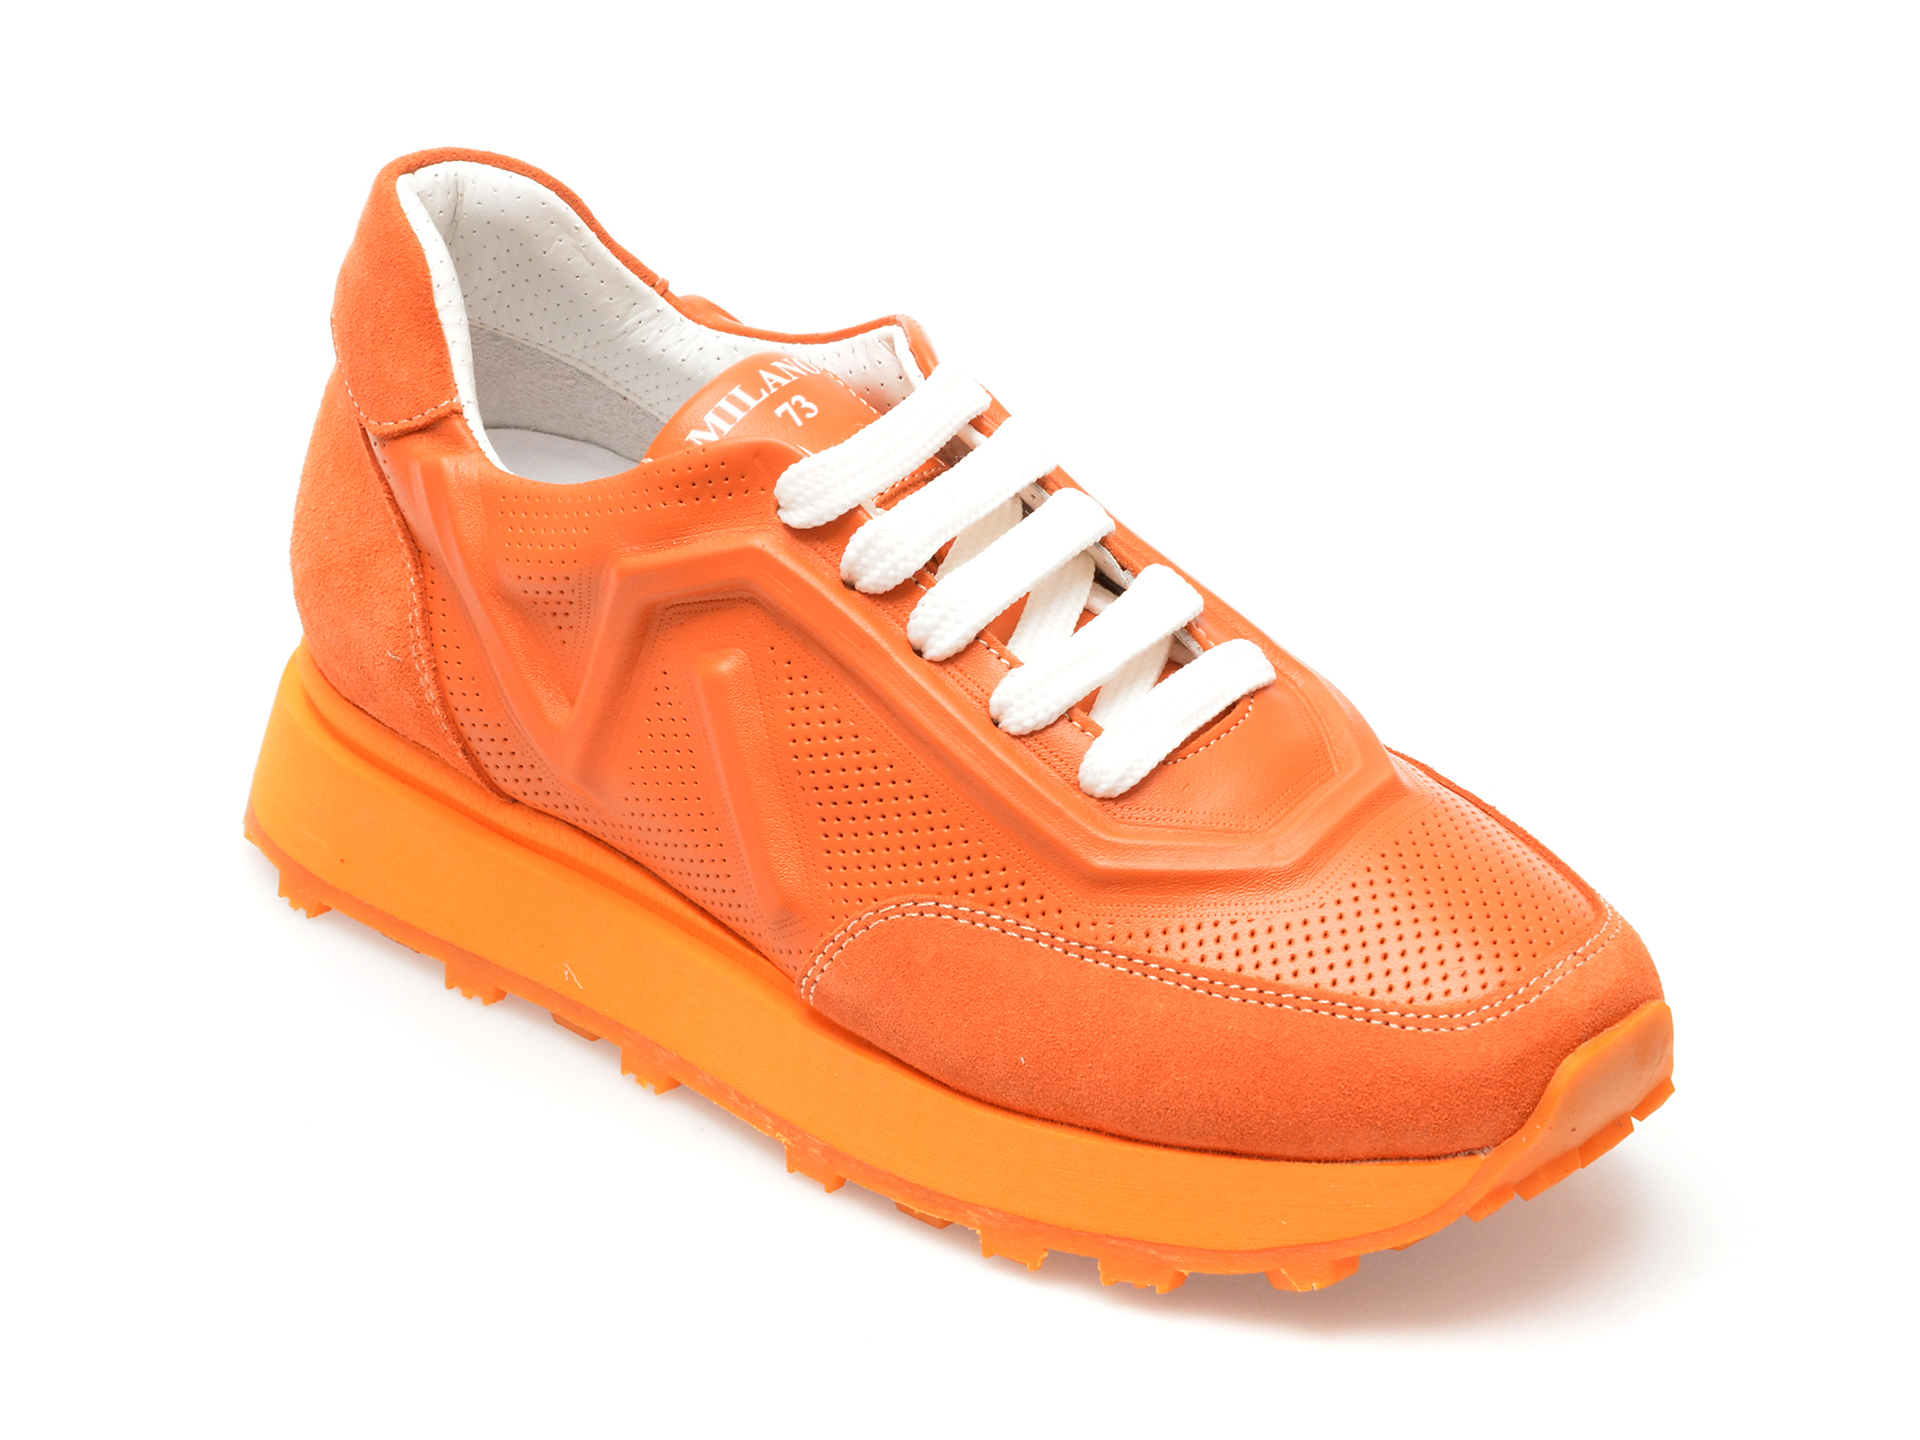 Pantofi casual GOLD DEER portocalii, 1187032, din piele naturala